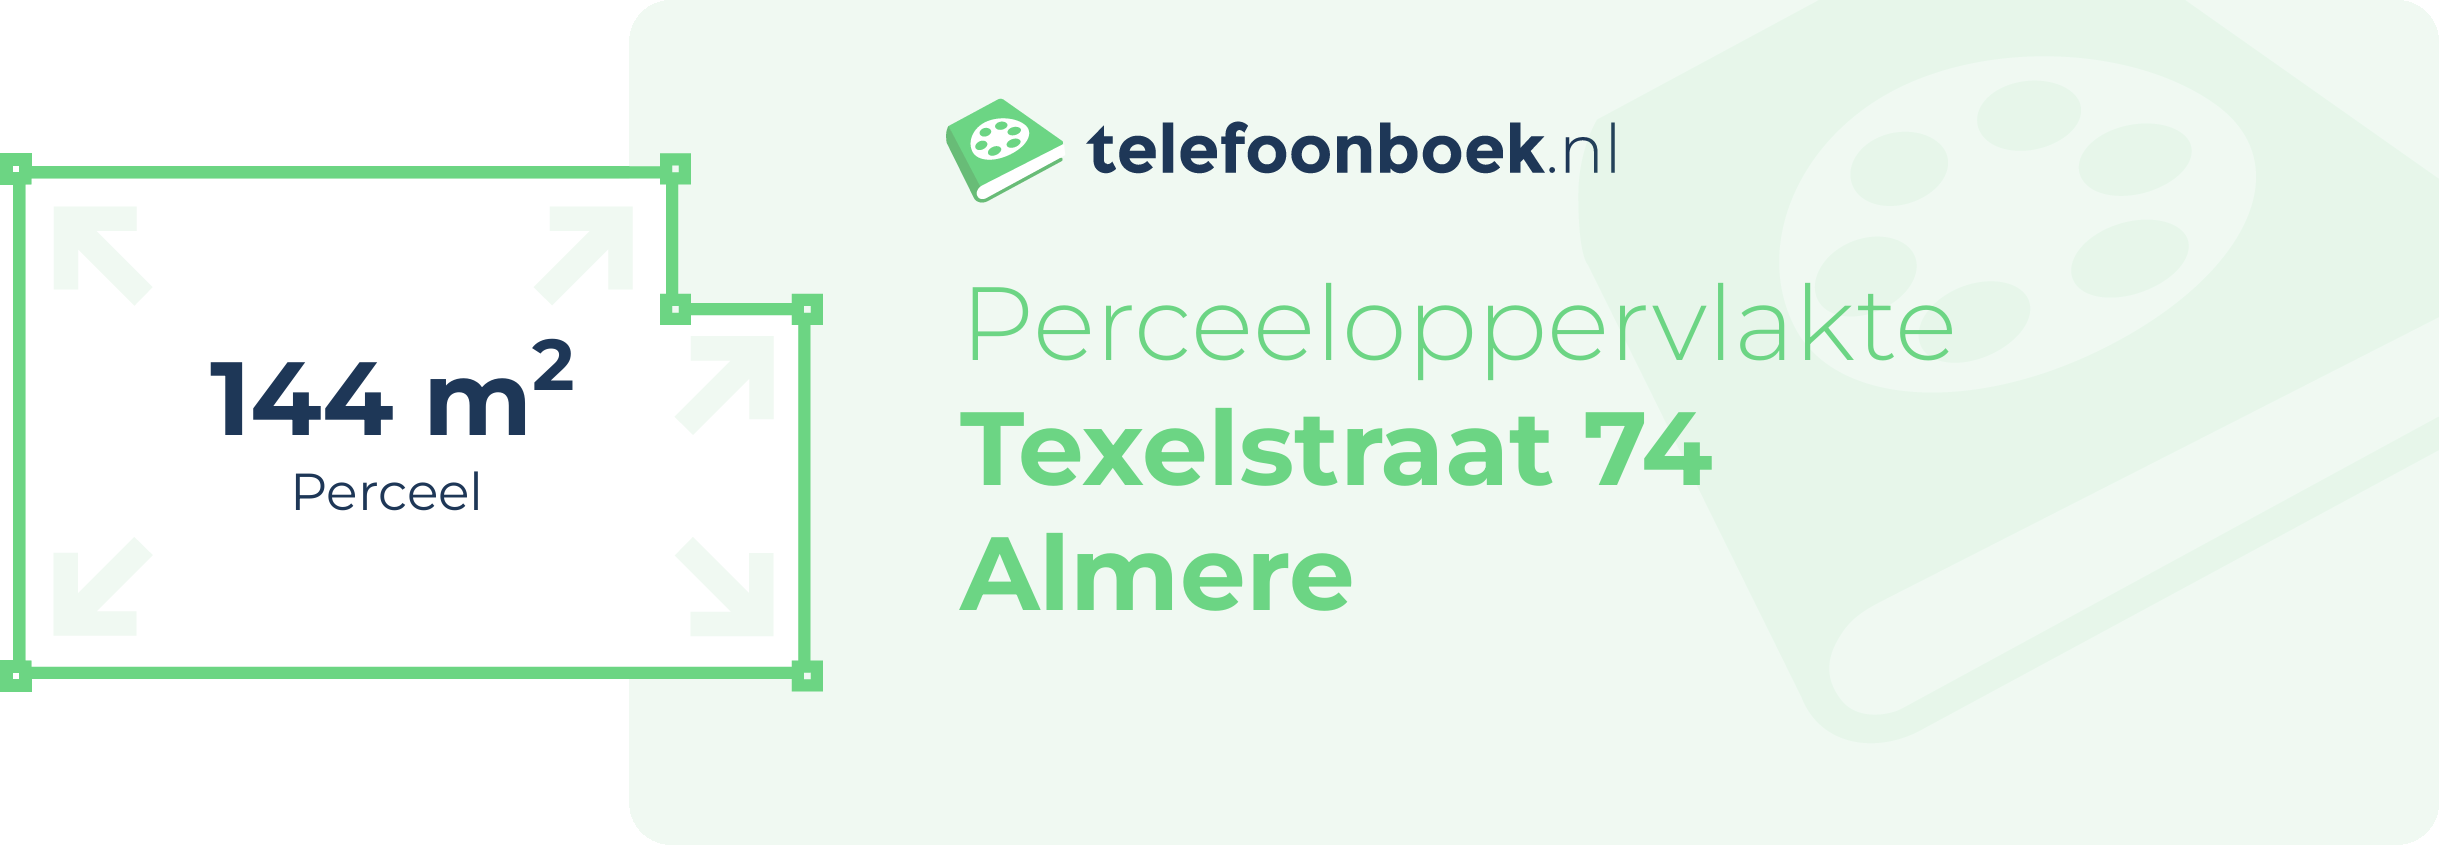 Perceeloppervlakte Texelstraat 74 Almere